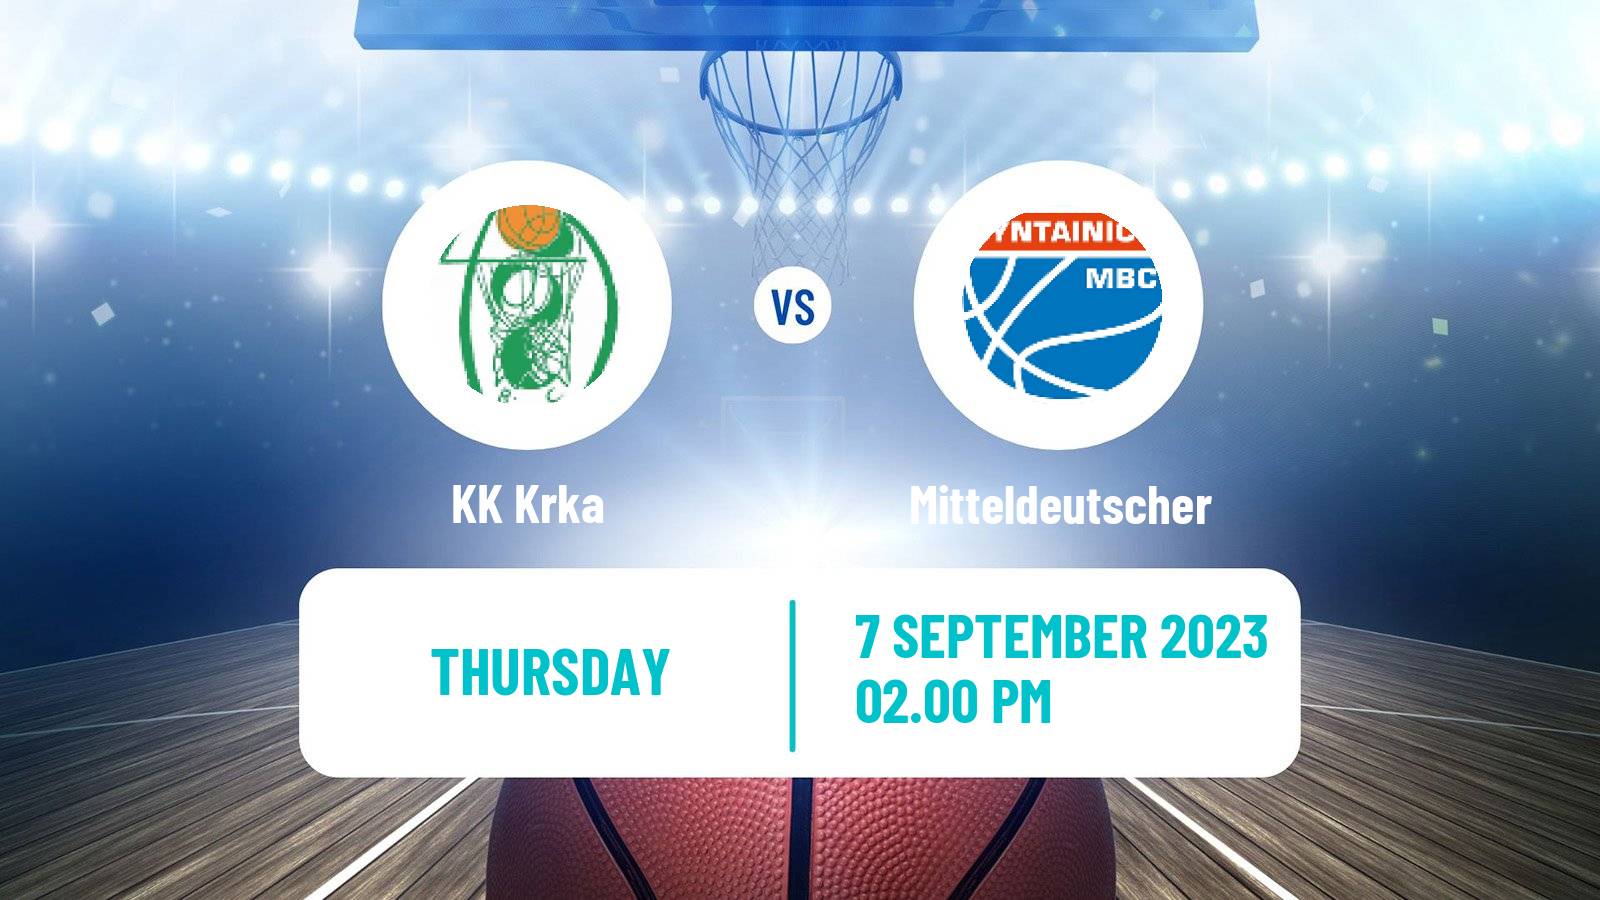 Basketball Club Friendly Basketball Krka - Mitteldeutscher